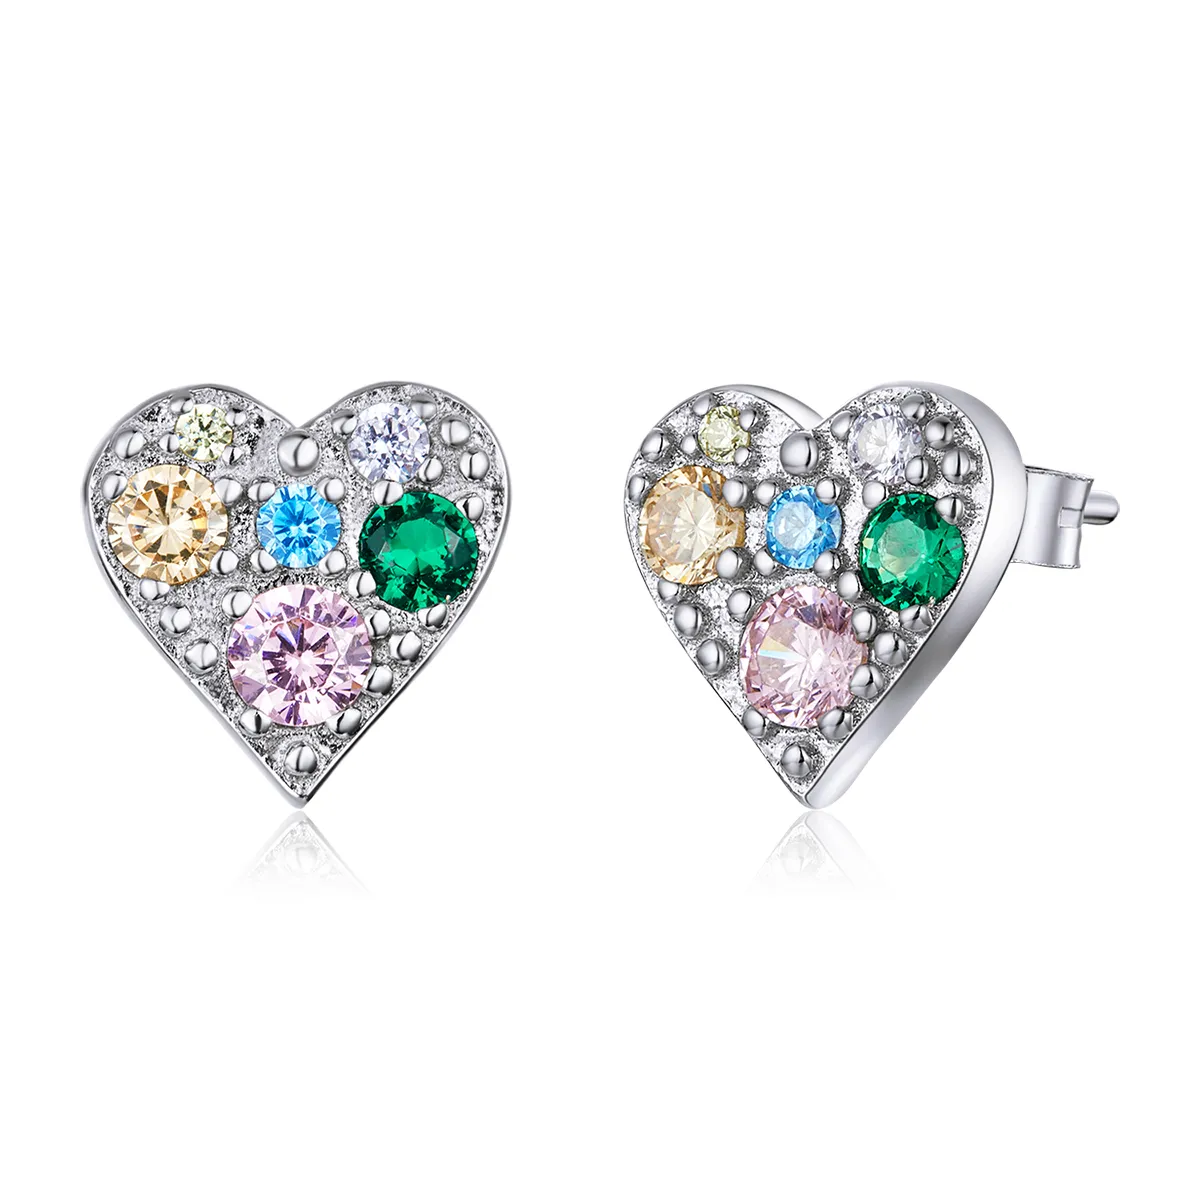 Pandora Style Silver Colorful Love Stud Earrings - SCE890